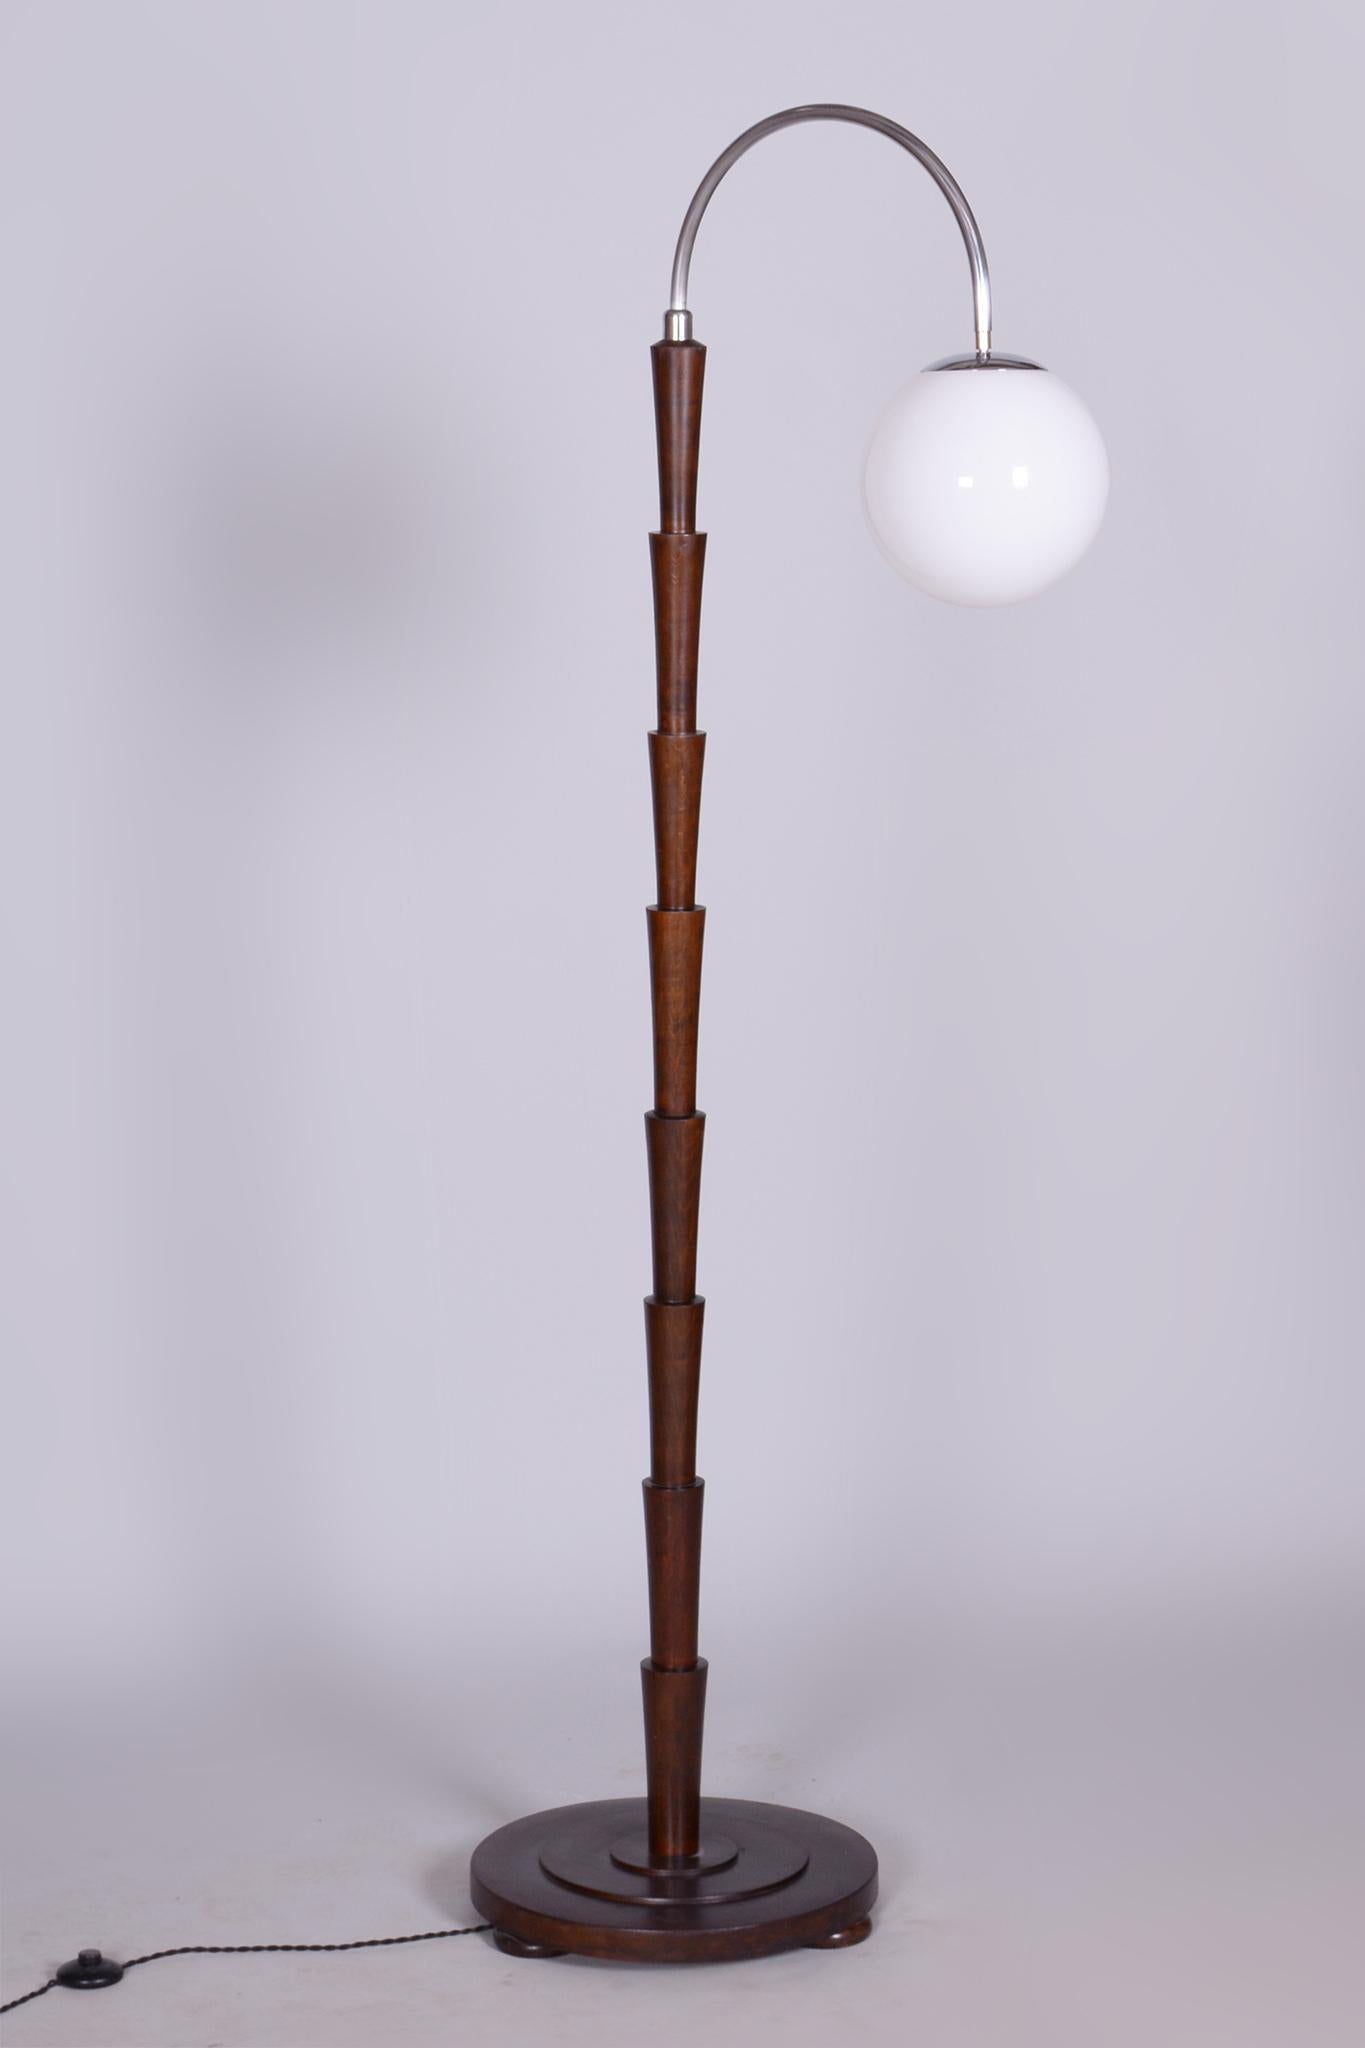 Restored Czech Cubism Floor Lamp, Beech, Chrome-plated Steel, Czechia, 1920s For Sale 2